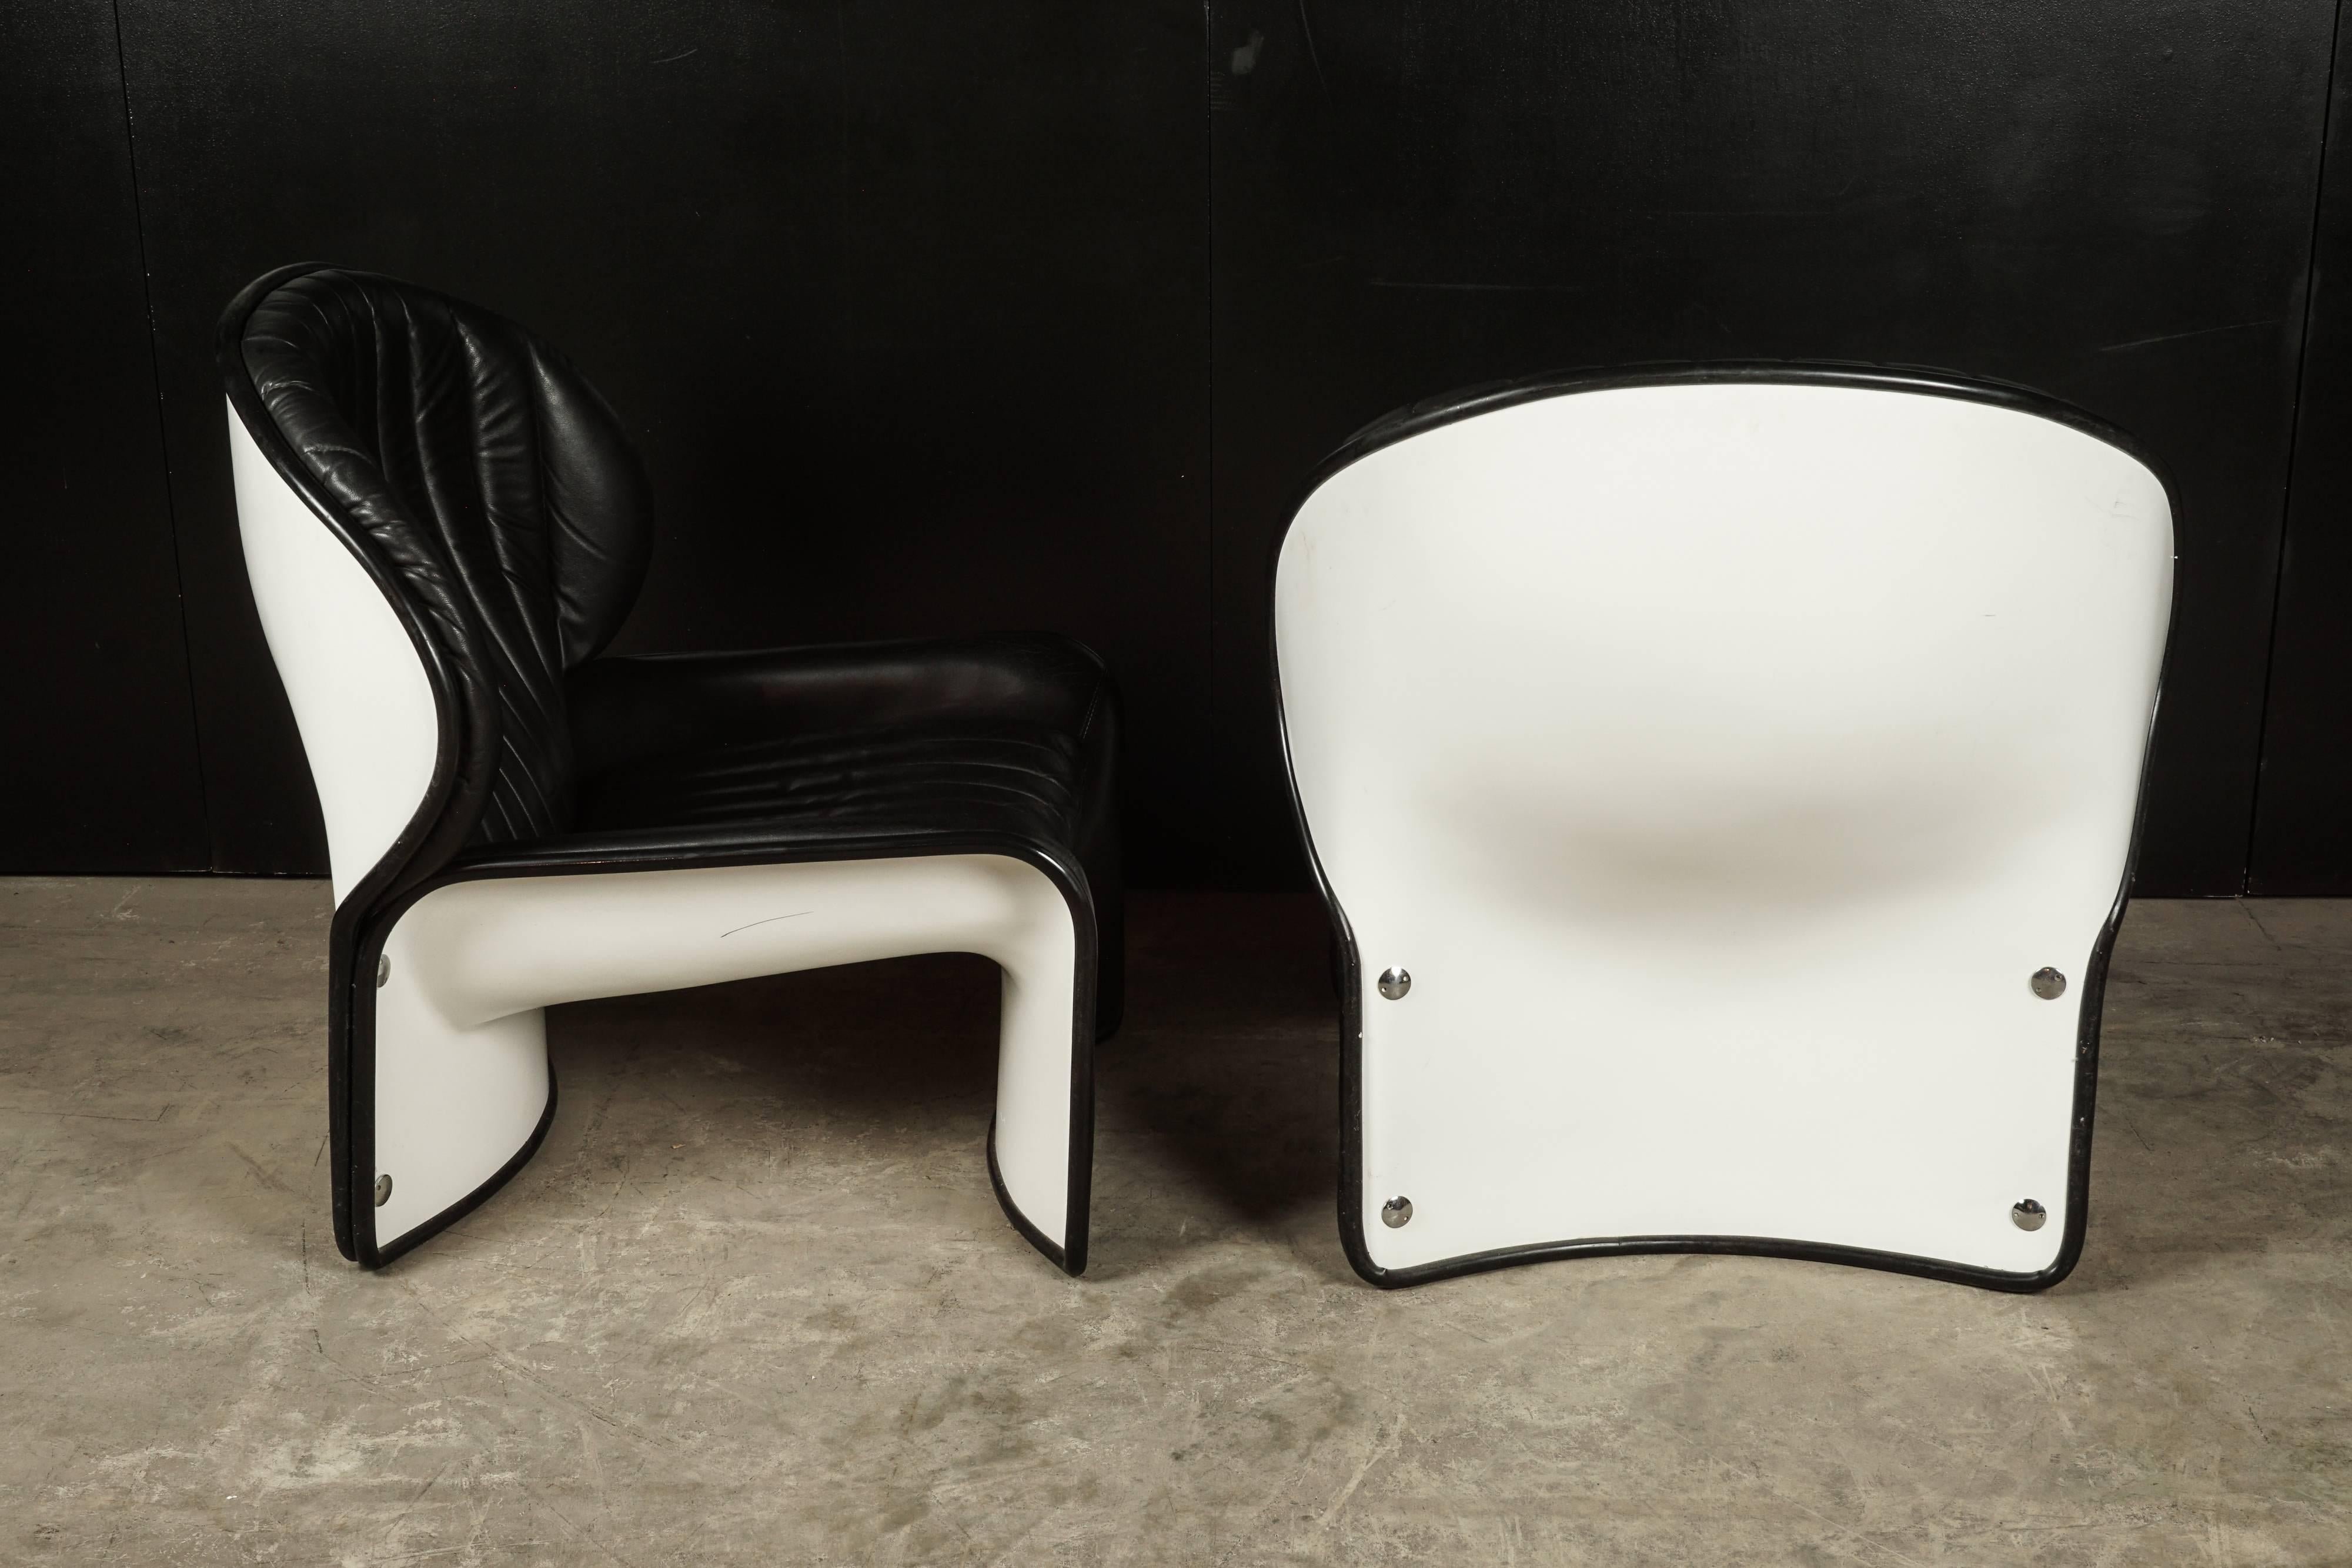 European Pair of Midcentury Lounge Chairs from Switzerland, circa 1970